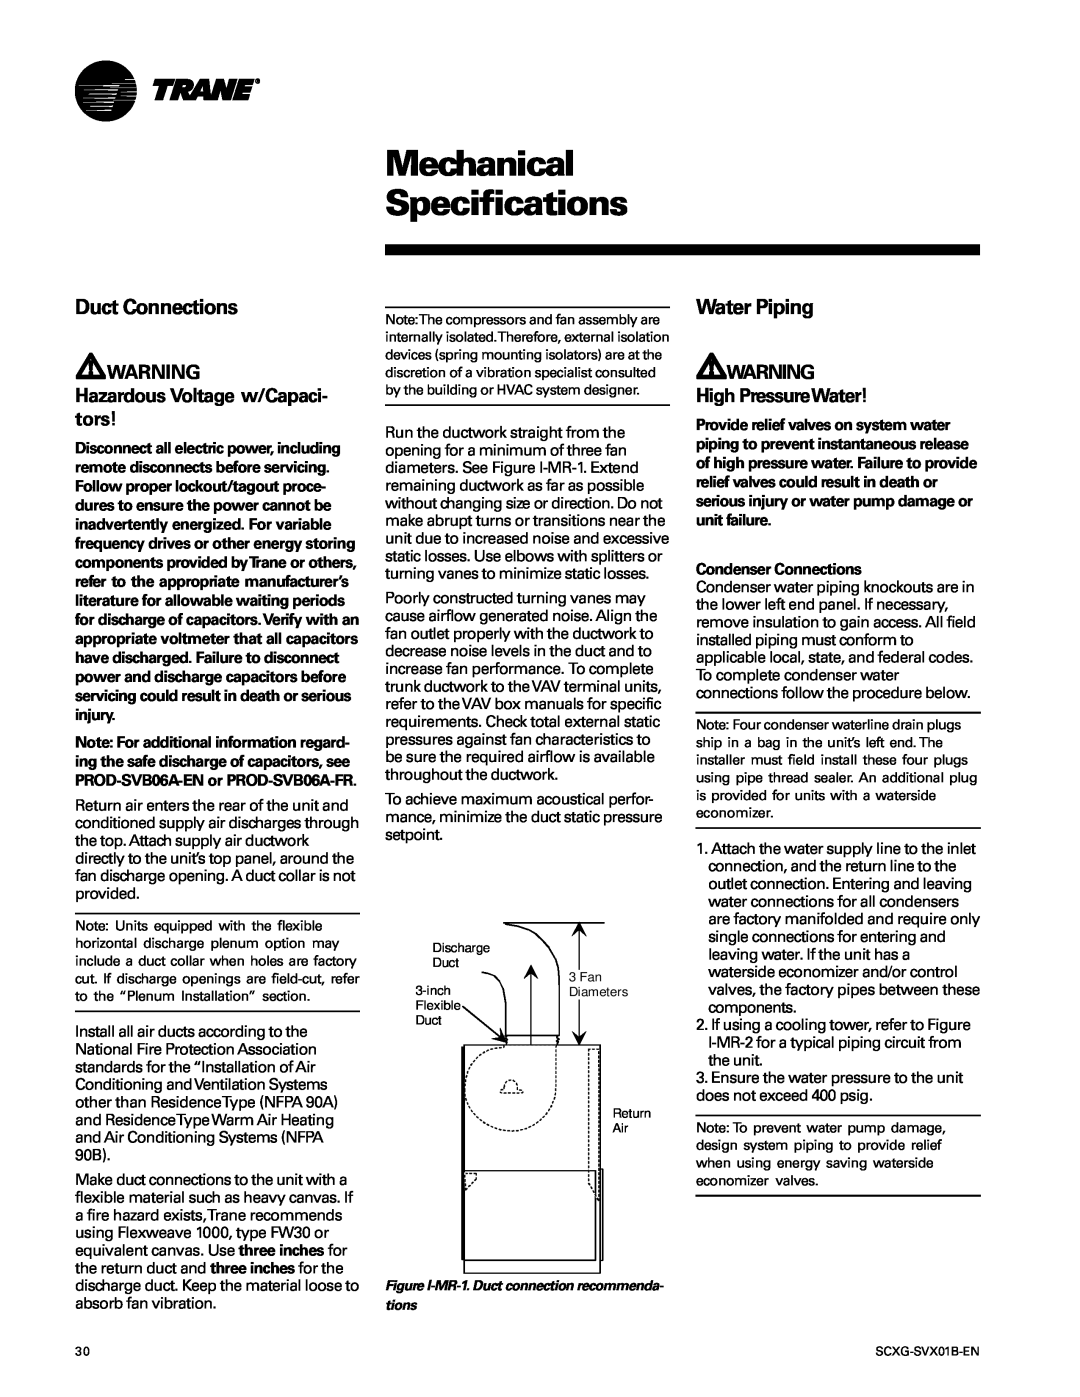 Trane SCXG-SVX01B-EN manual Mechanical Specifications, Duct Connections, Water Piping, Hazardous Voltage w/Capaci- tors 